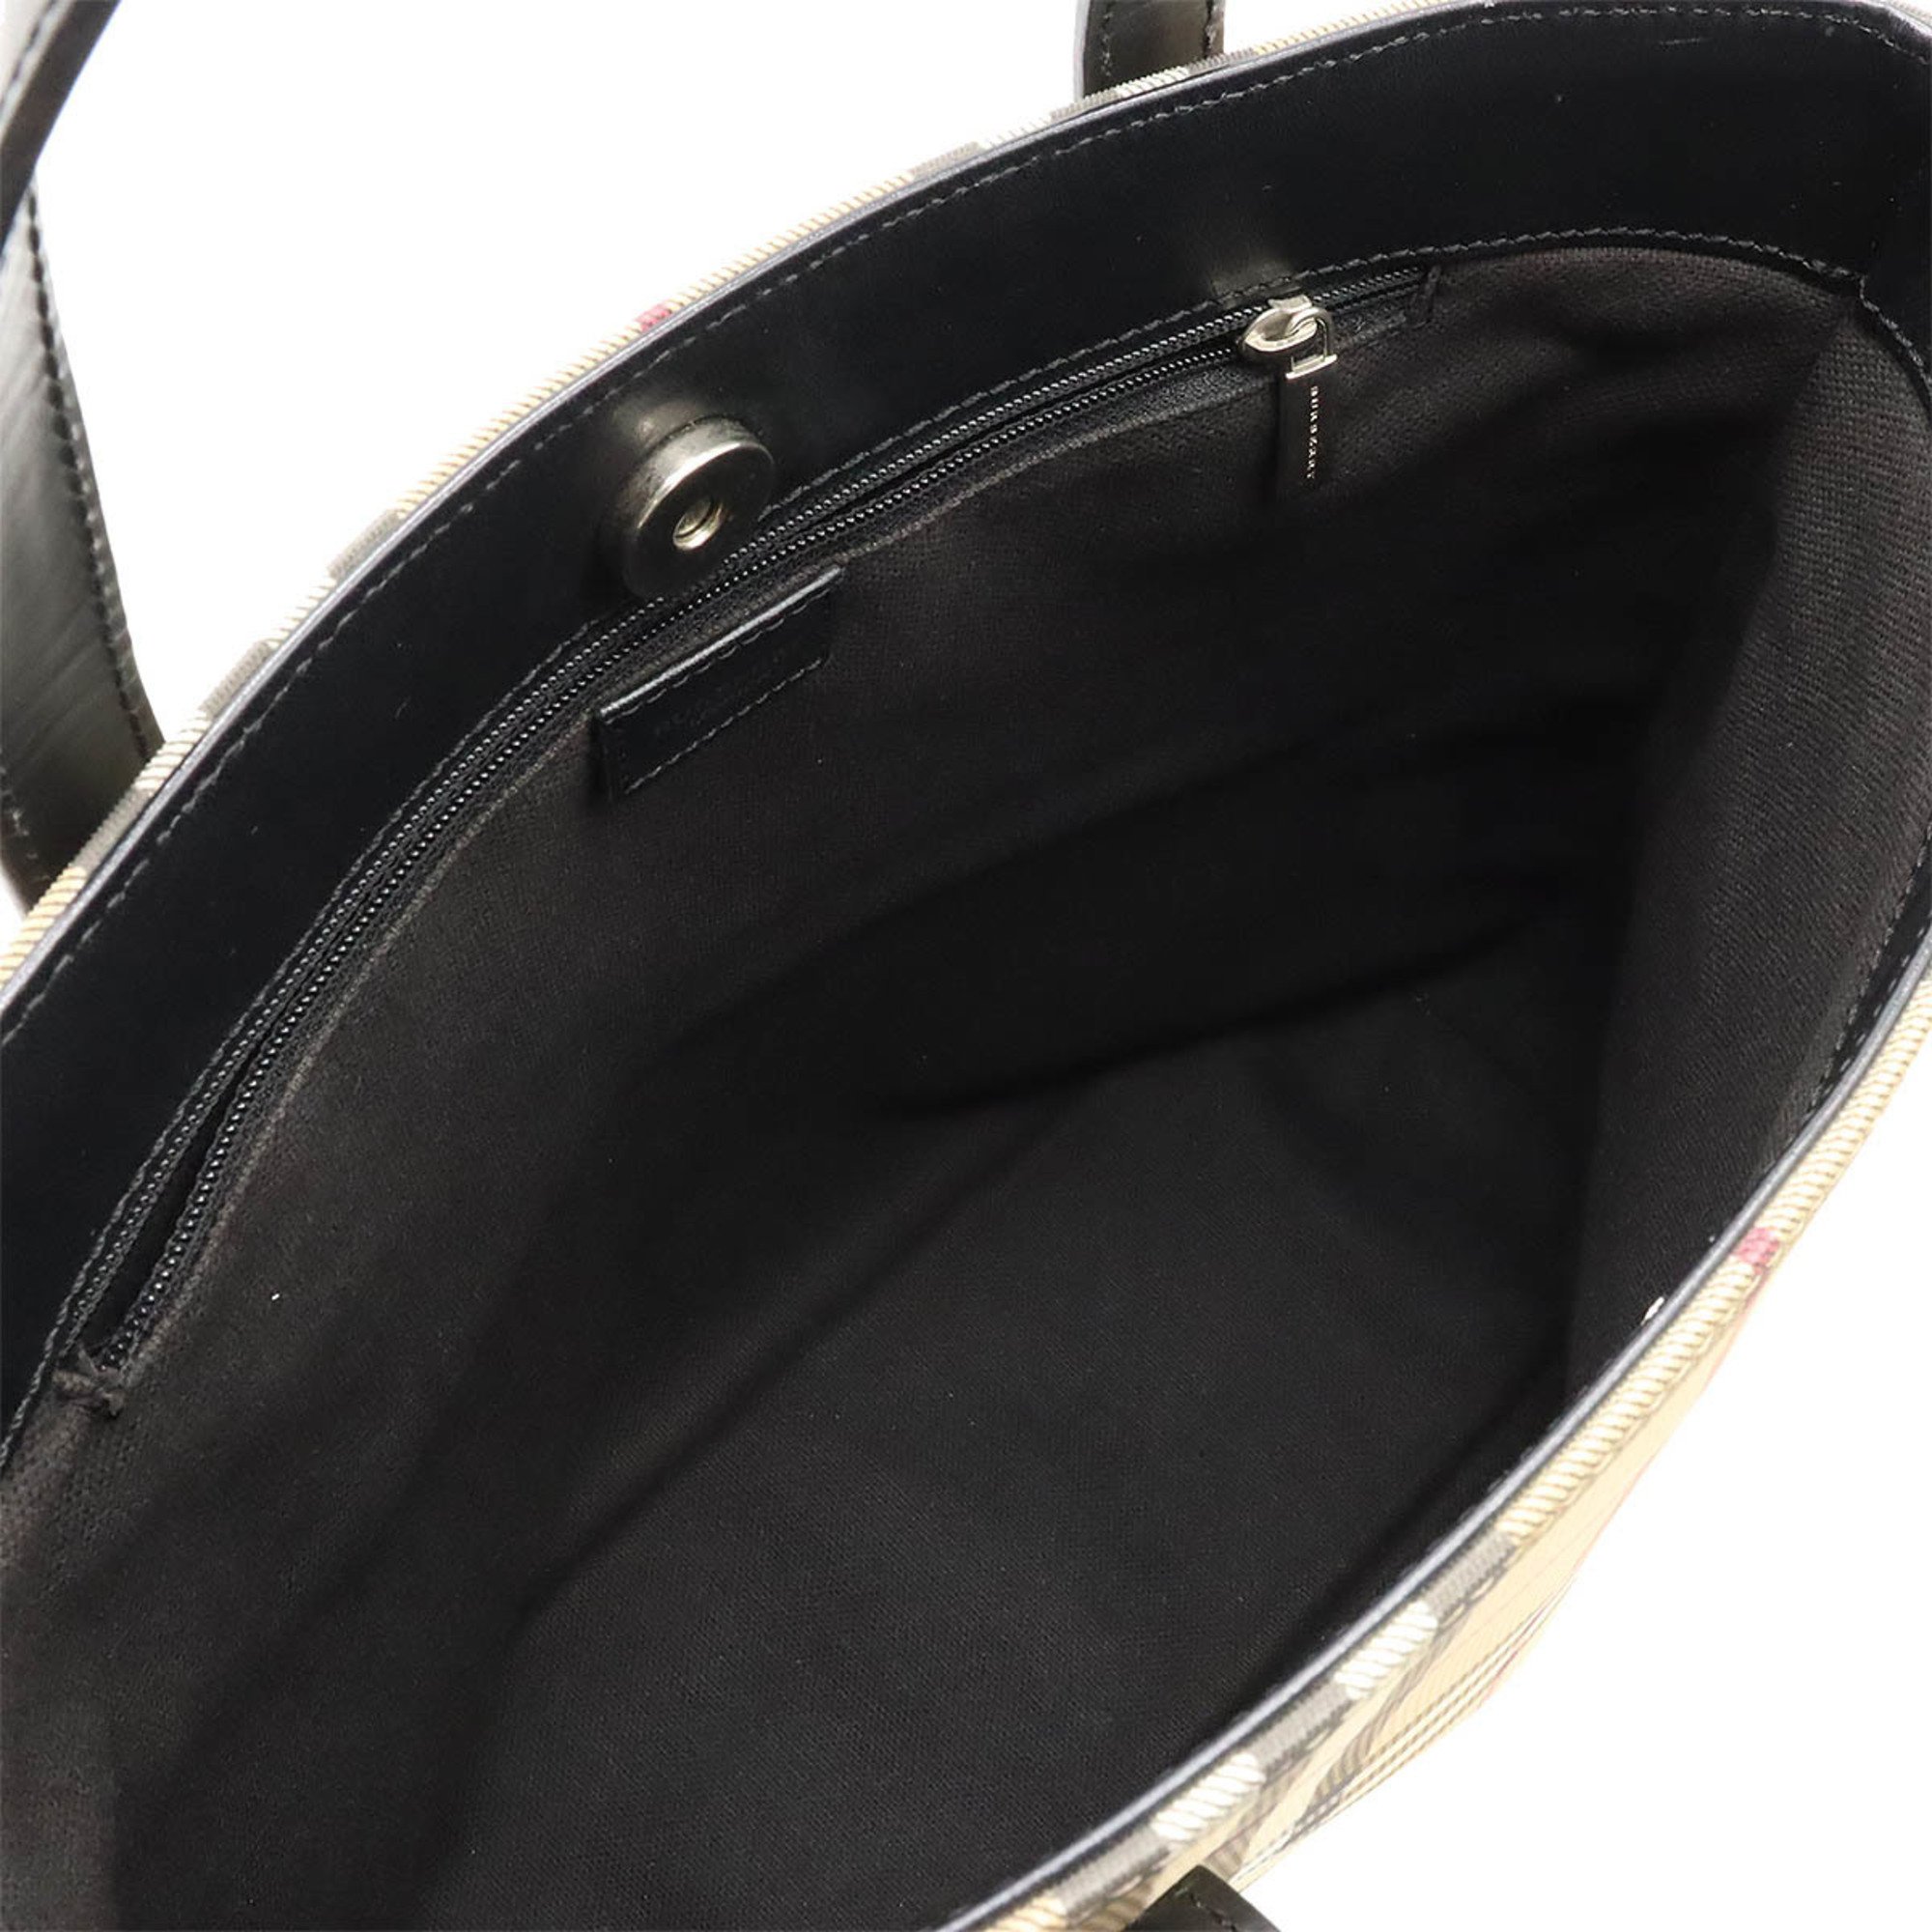 BURBERRY Nova Check Pattern Tote Bag Handbag PVC Leather Beige Black Bordeaux